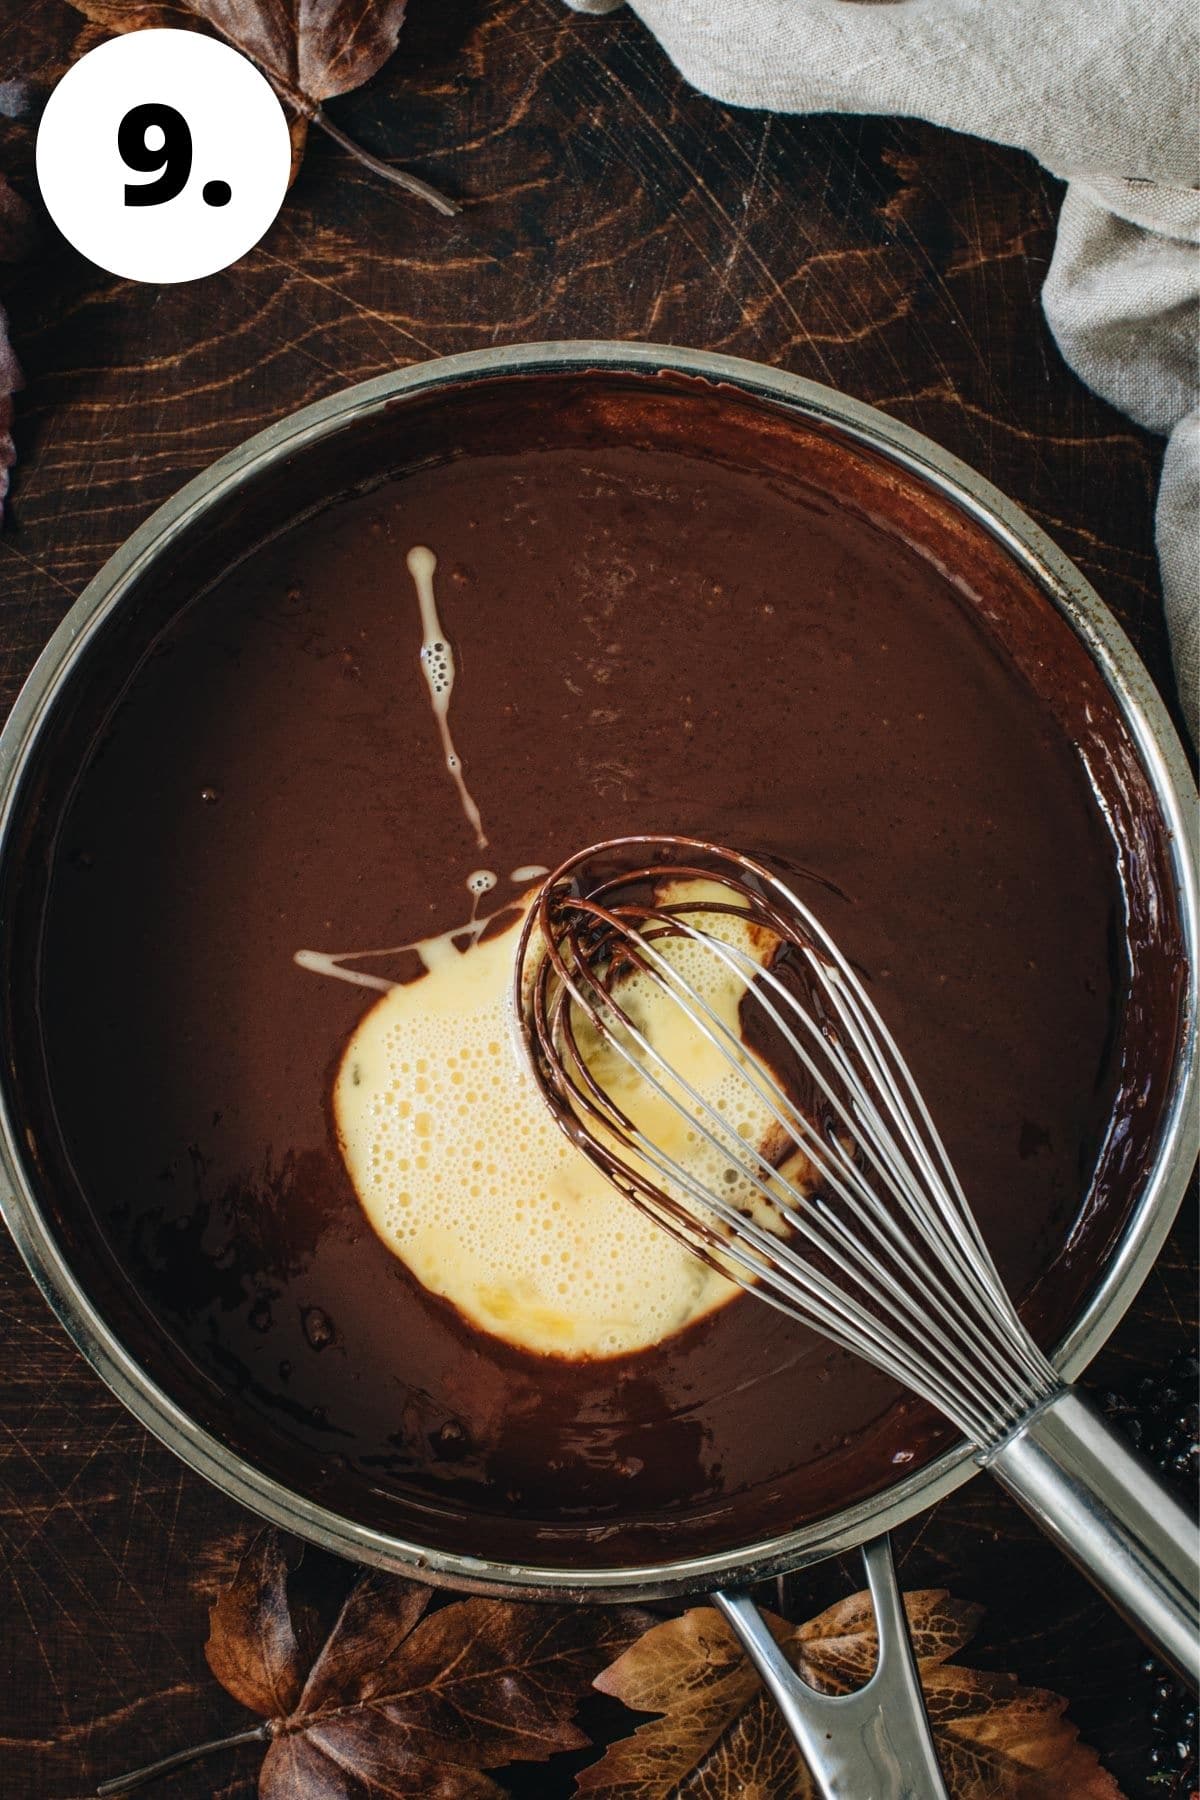 Chocolate tart process step 9.